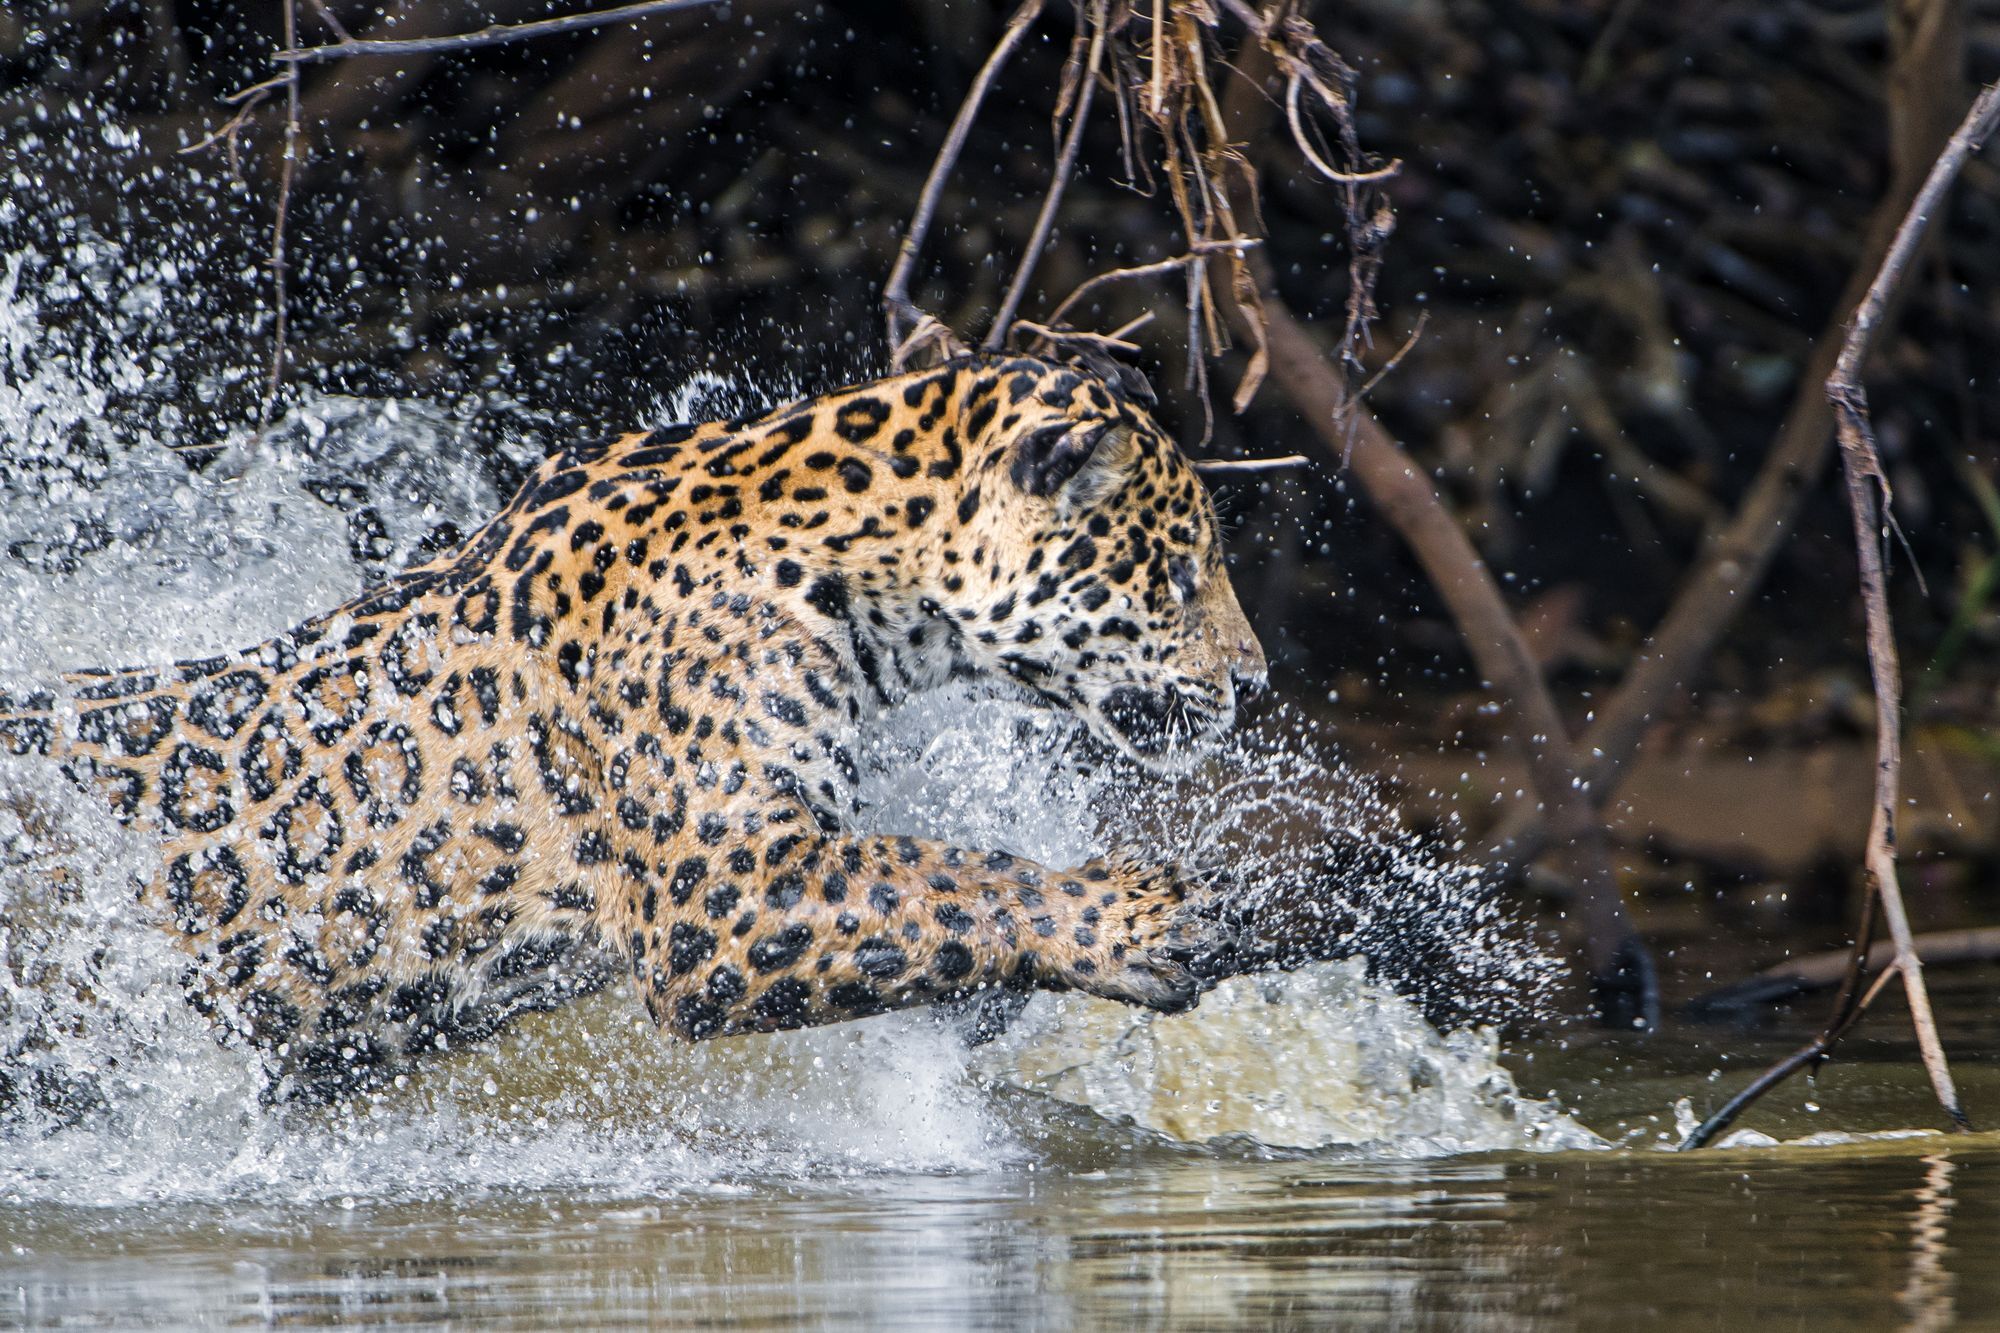 Female jaguar with cubs - Jaguar, Young, Big cats, Cat family, Predatory animals, Wild animals, wildlife, Brazil, South America, The photo, Longpost, River, 